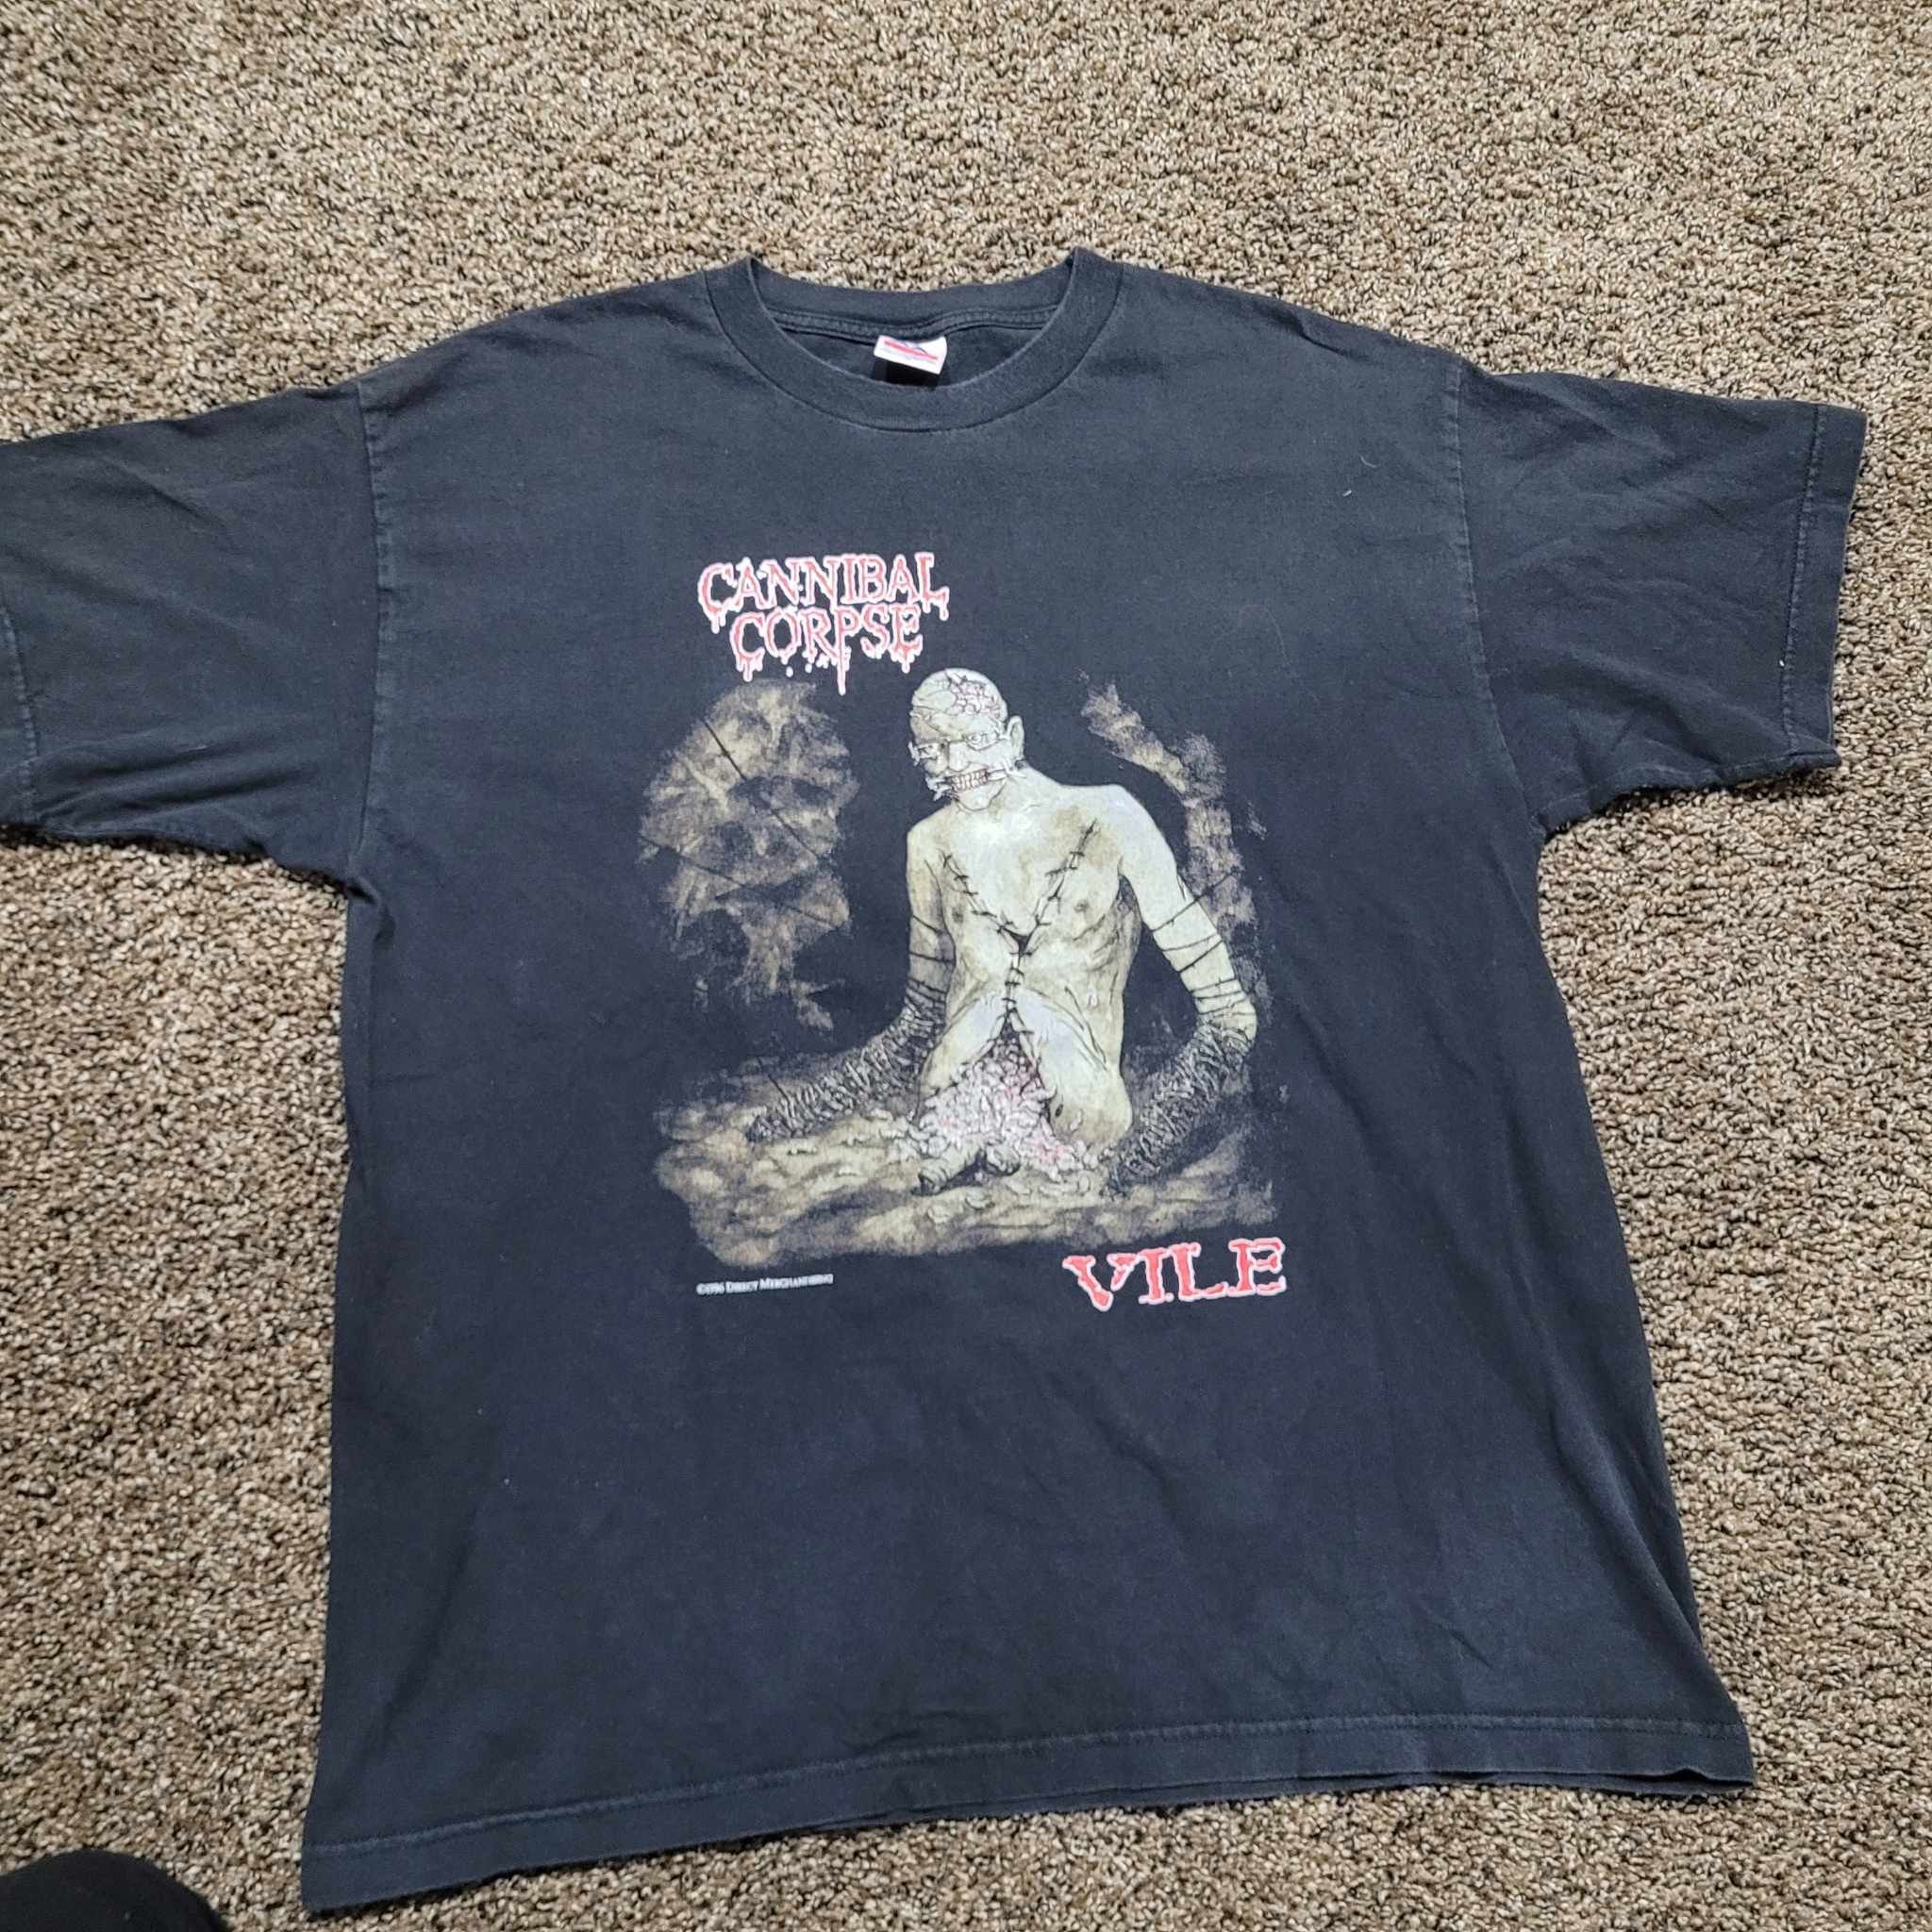 Cannibal Corpse Vile Shirt | Grailed